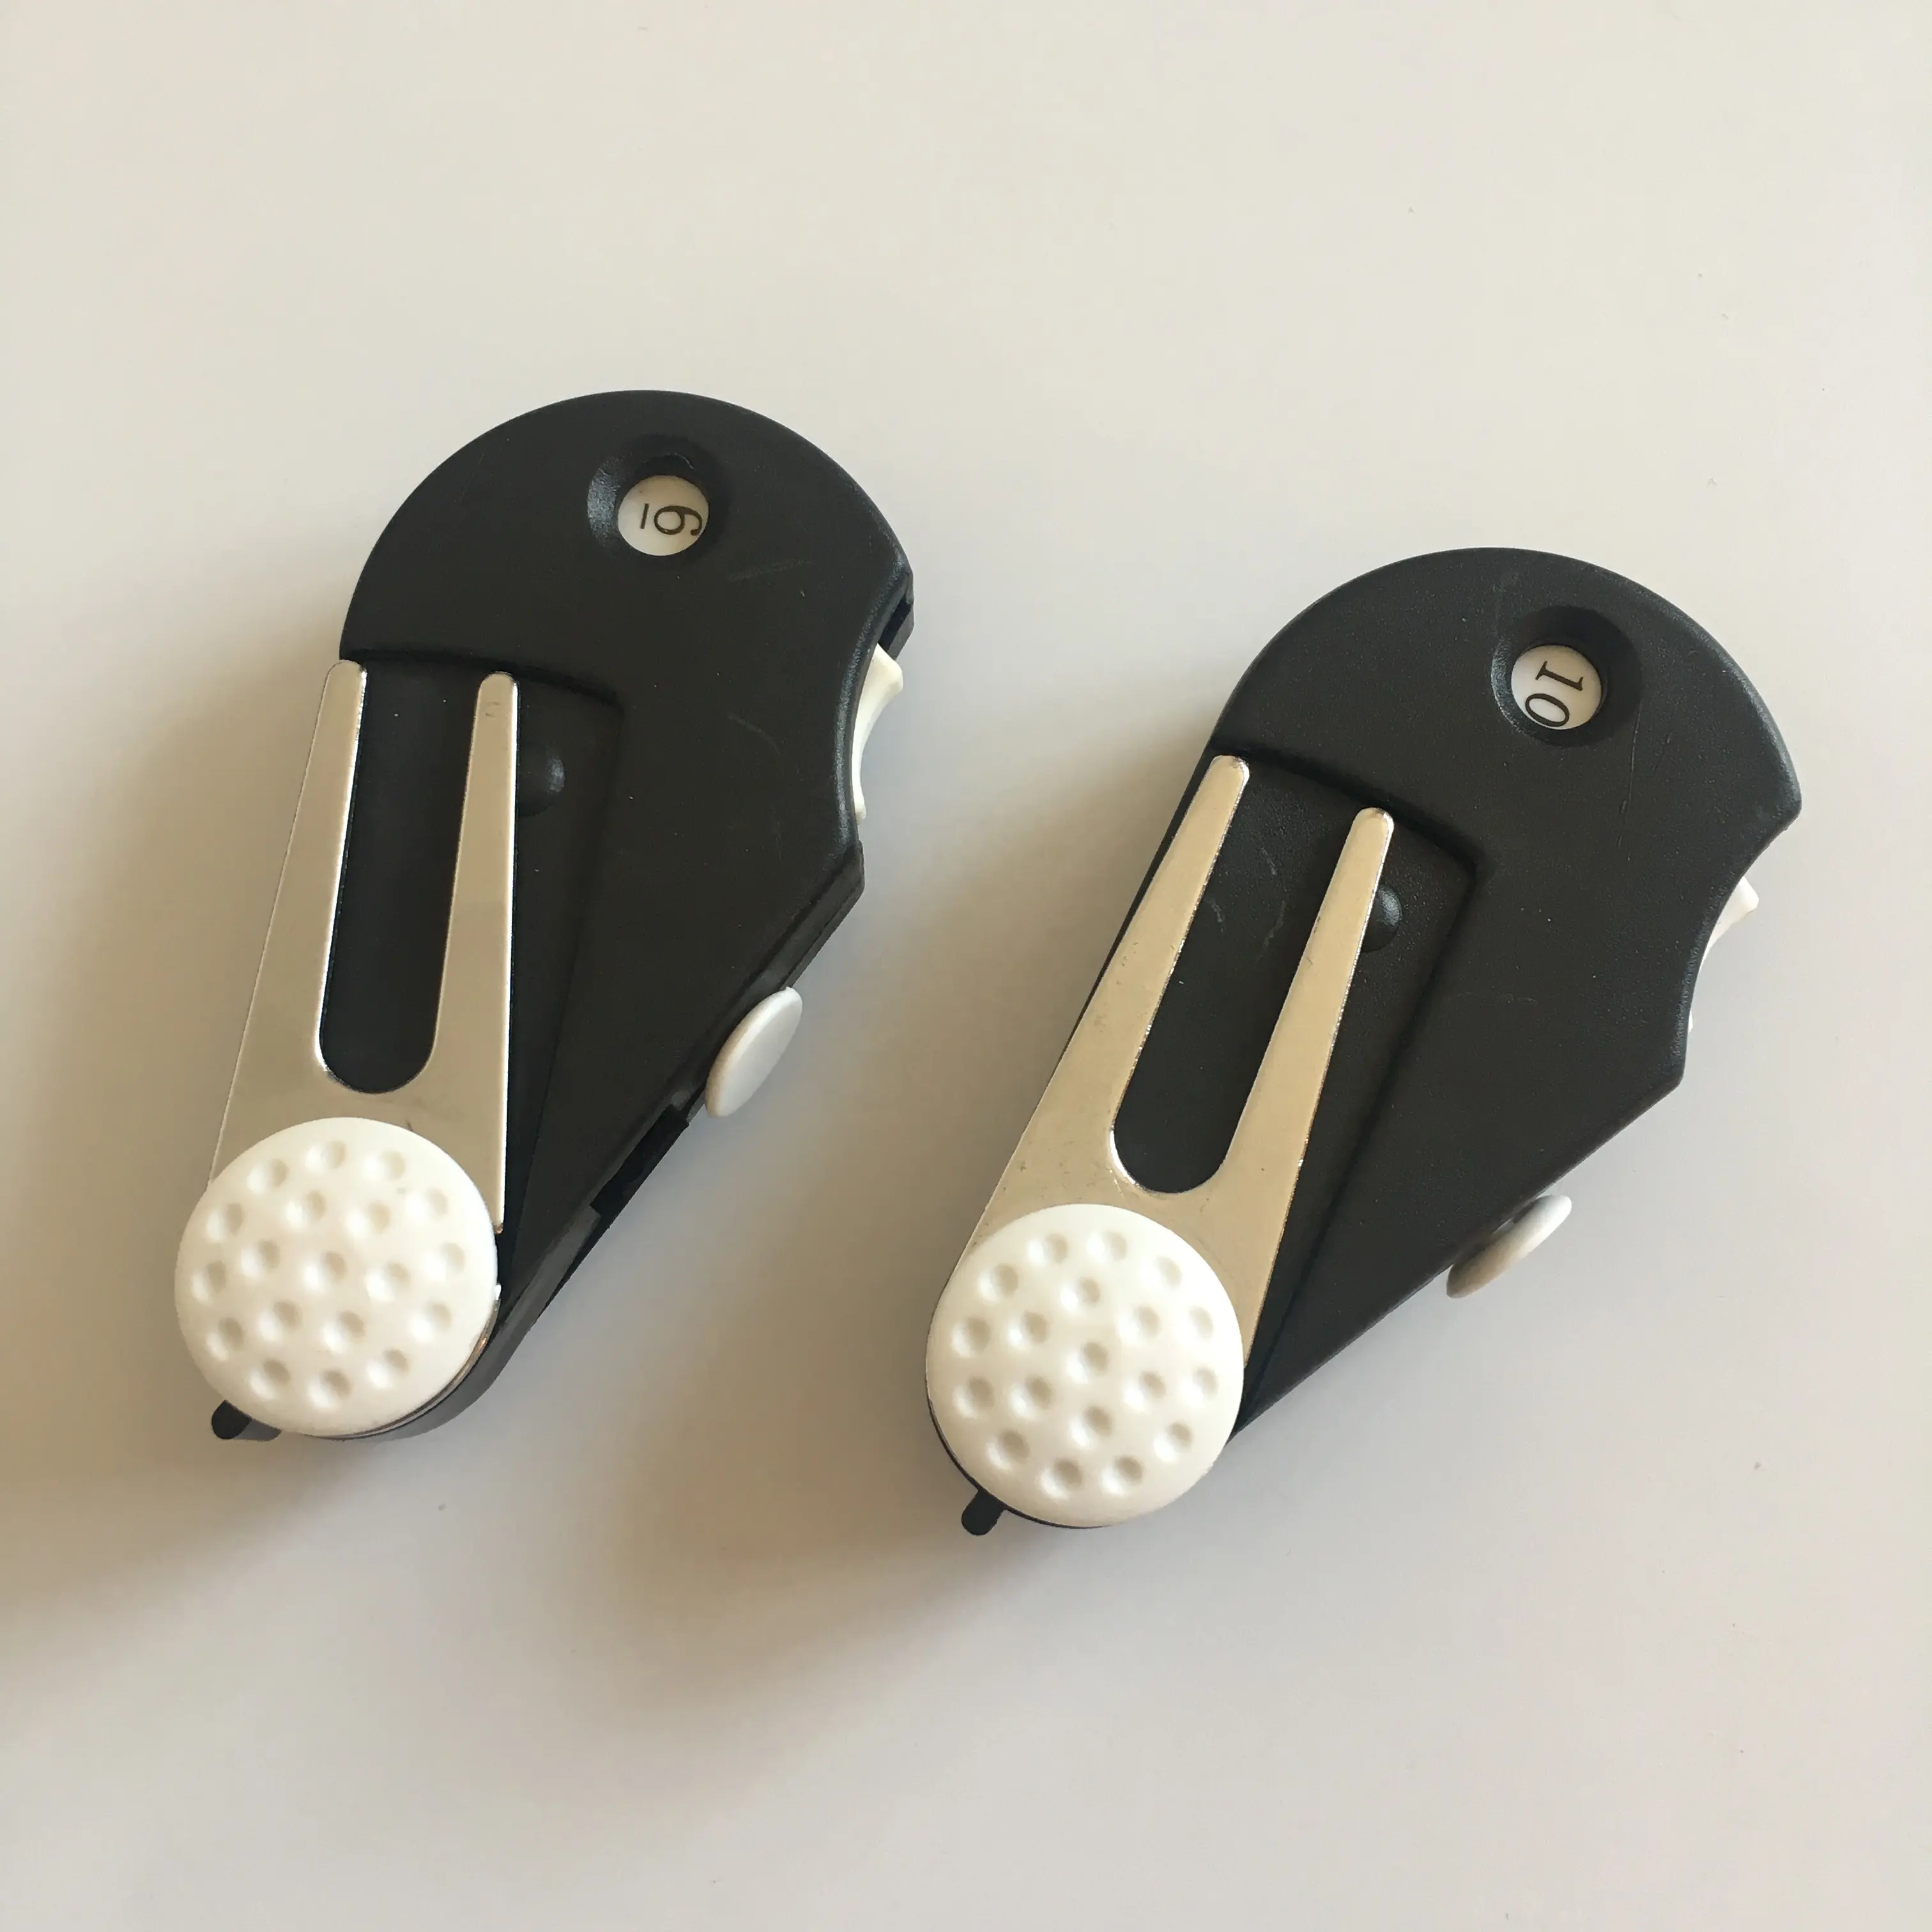 Kit Alat Divot Golf Multifungsi Saku 5 Dalam Satu Ringan dengan Penghitung Skor